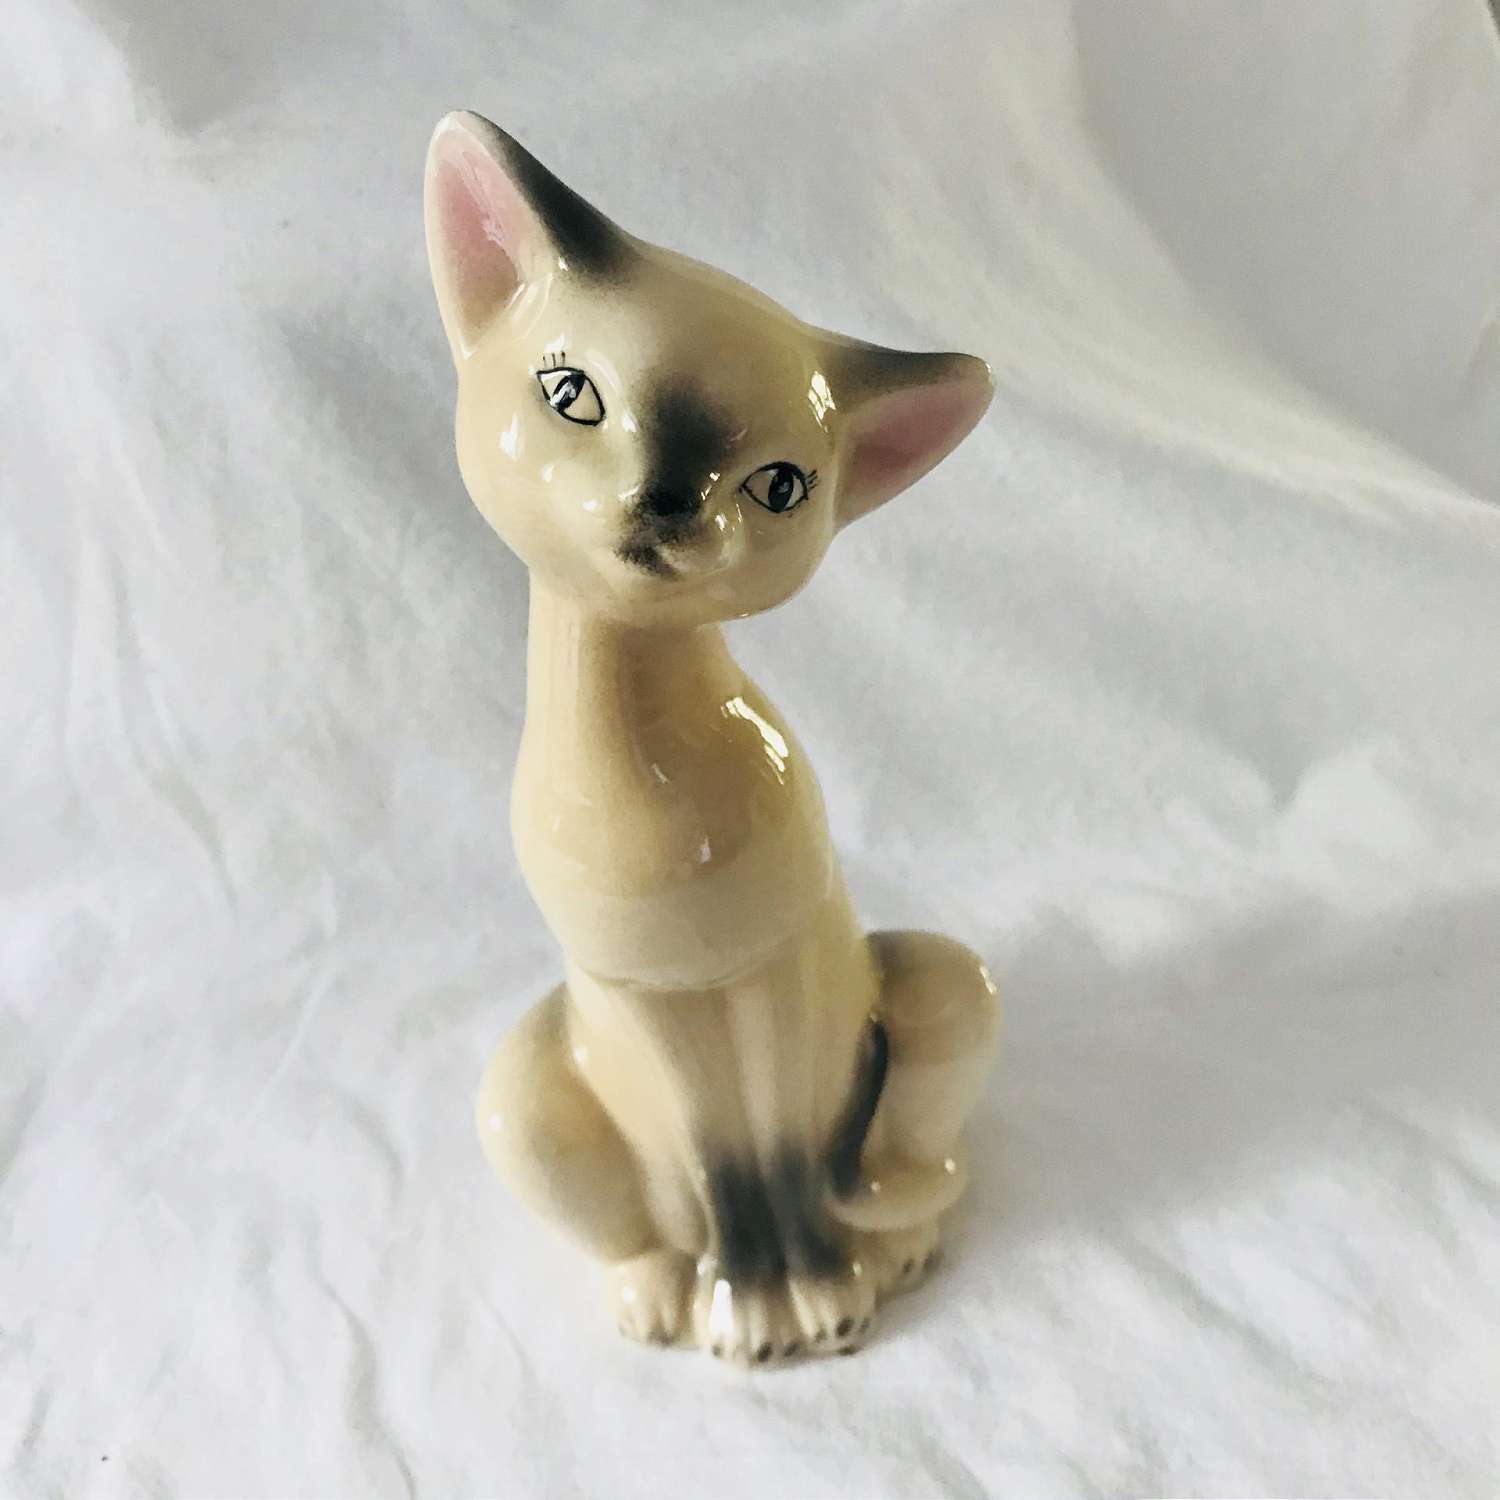 https://www.truevintageantiques.com/wp-content/uploads/2019/12/vintage-siamese-cat-kitten-figurines-porelain-large-cottage-display-farmhouse-shabby-chic-collectible-home-decor-5dfa303b1-scaled.jpg